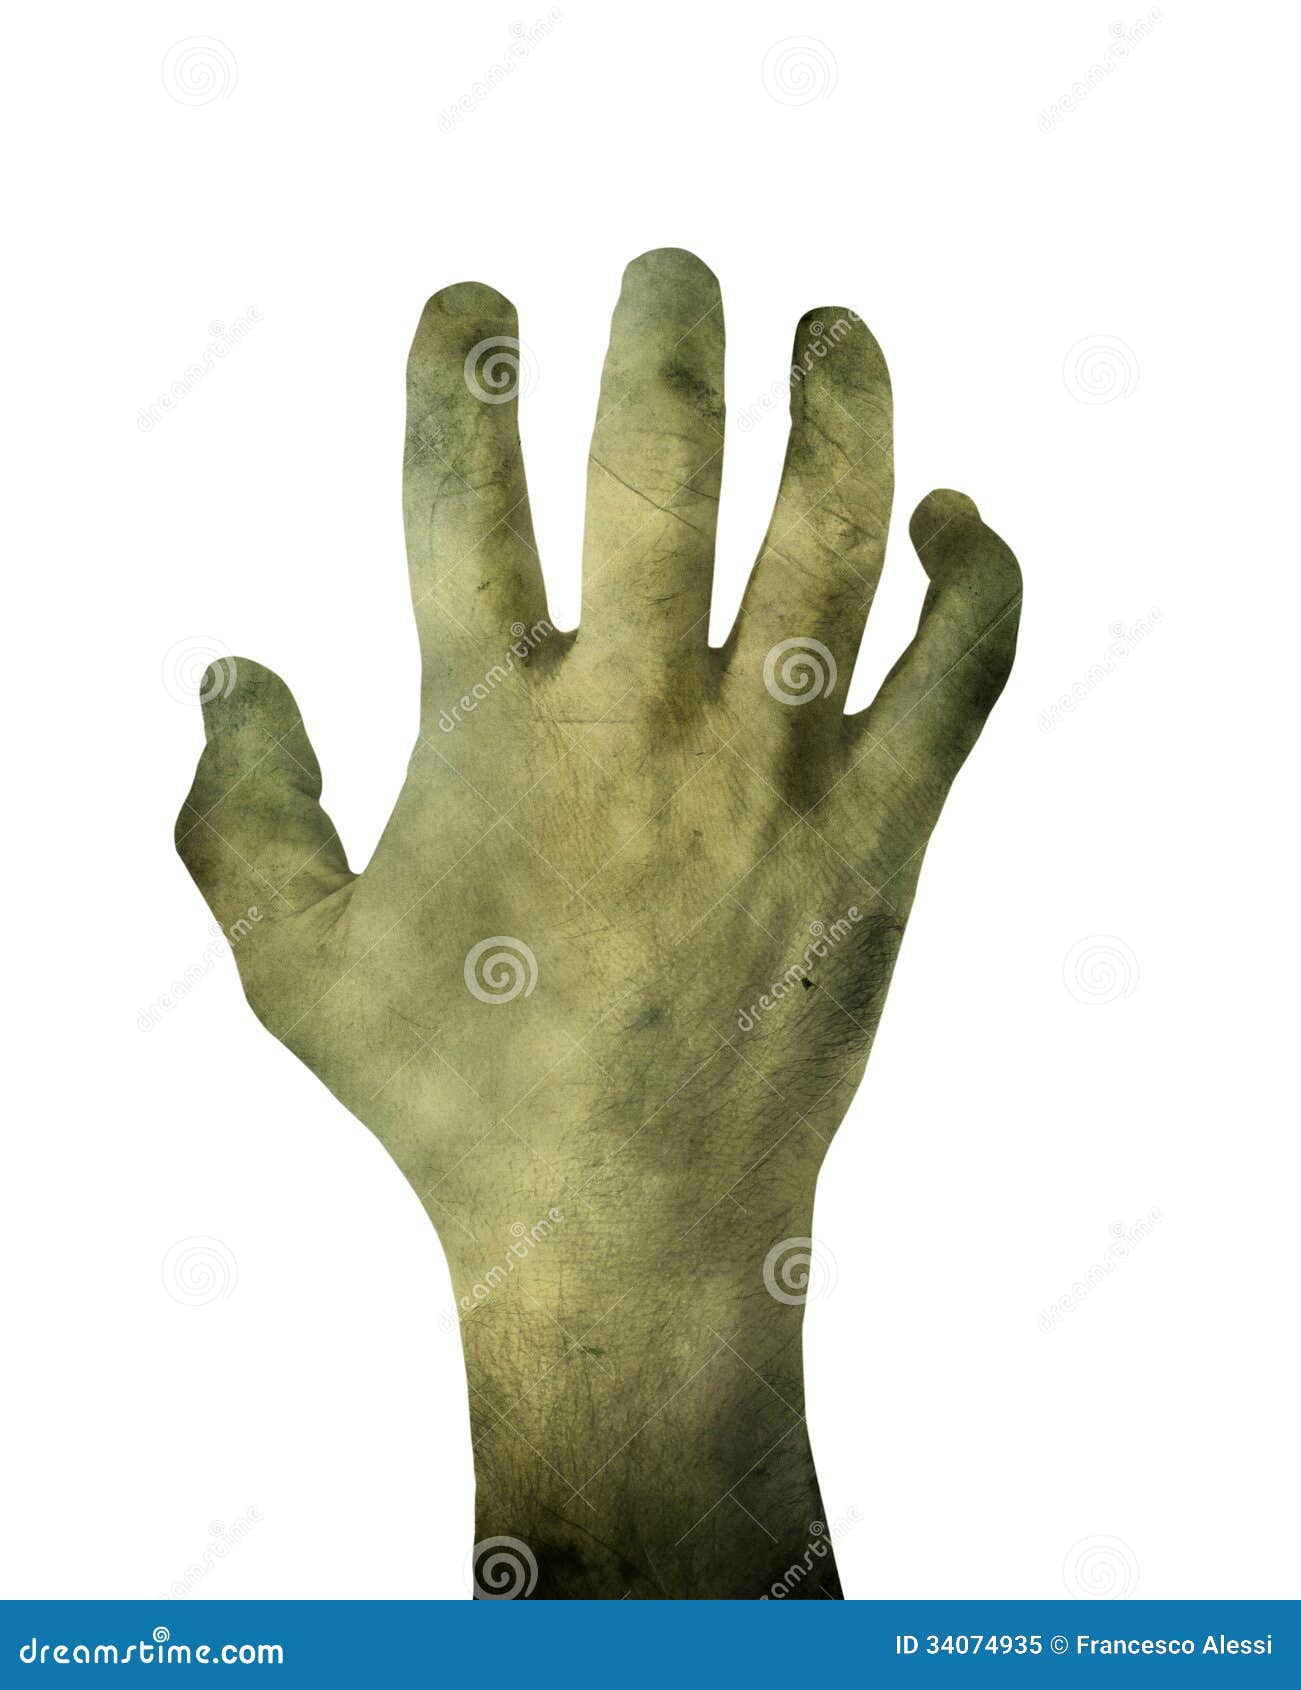 Zombie hand stock image. Image of october, grunge, isolated - 34074935